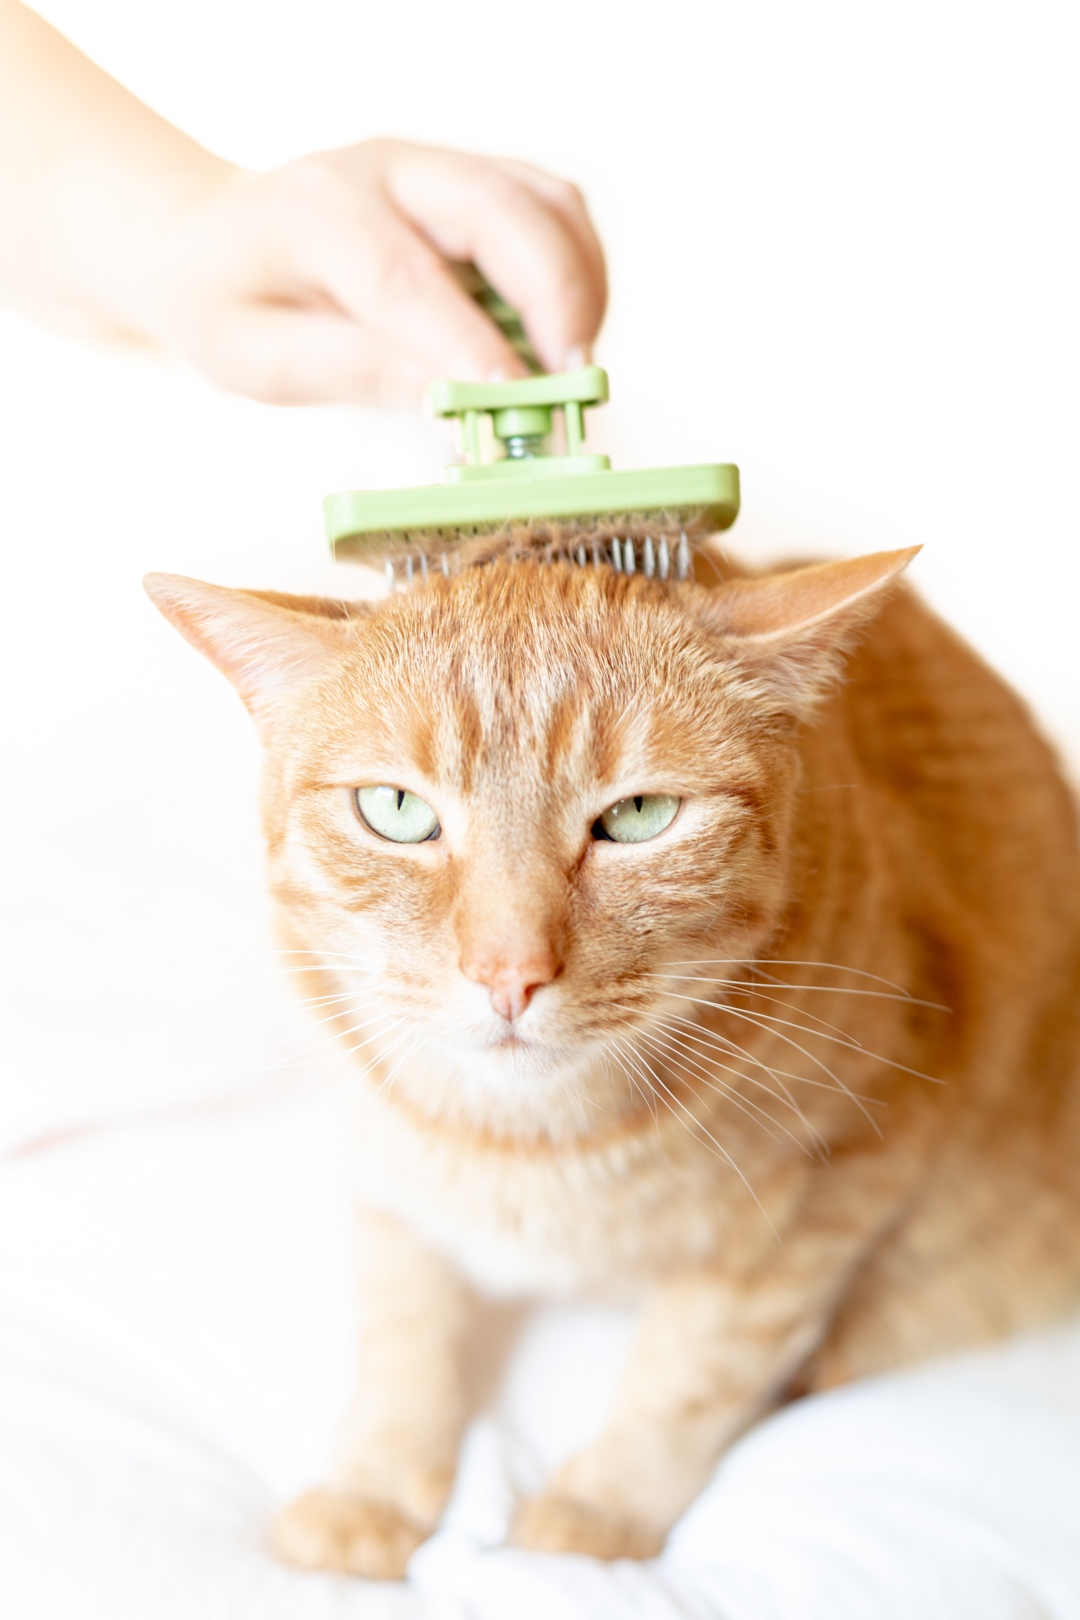 grumpy cat getting brushed